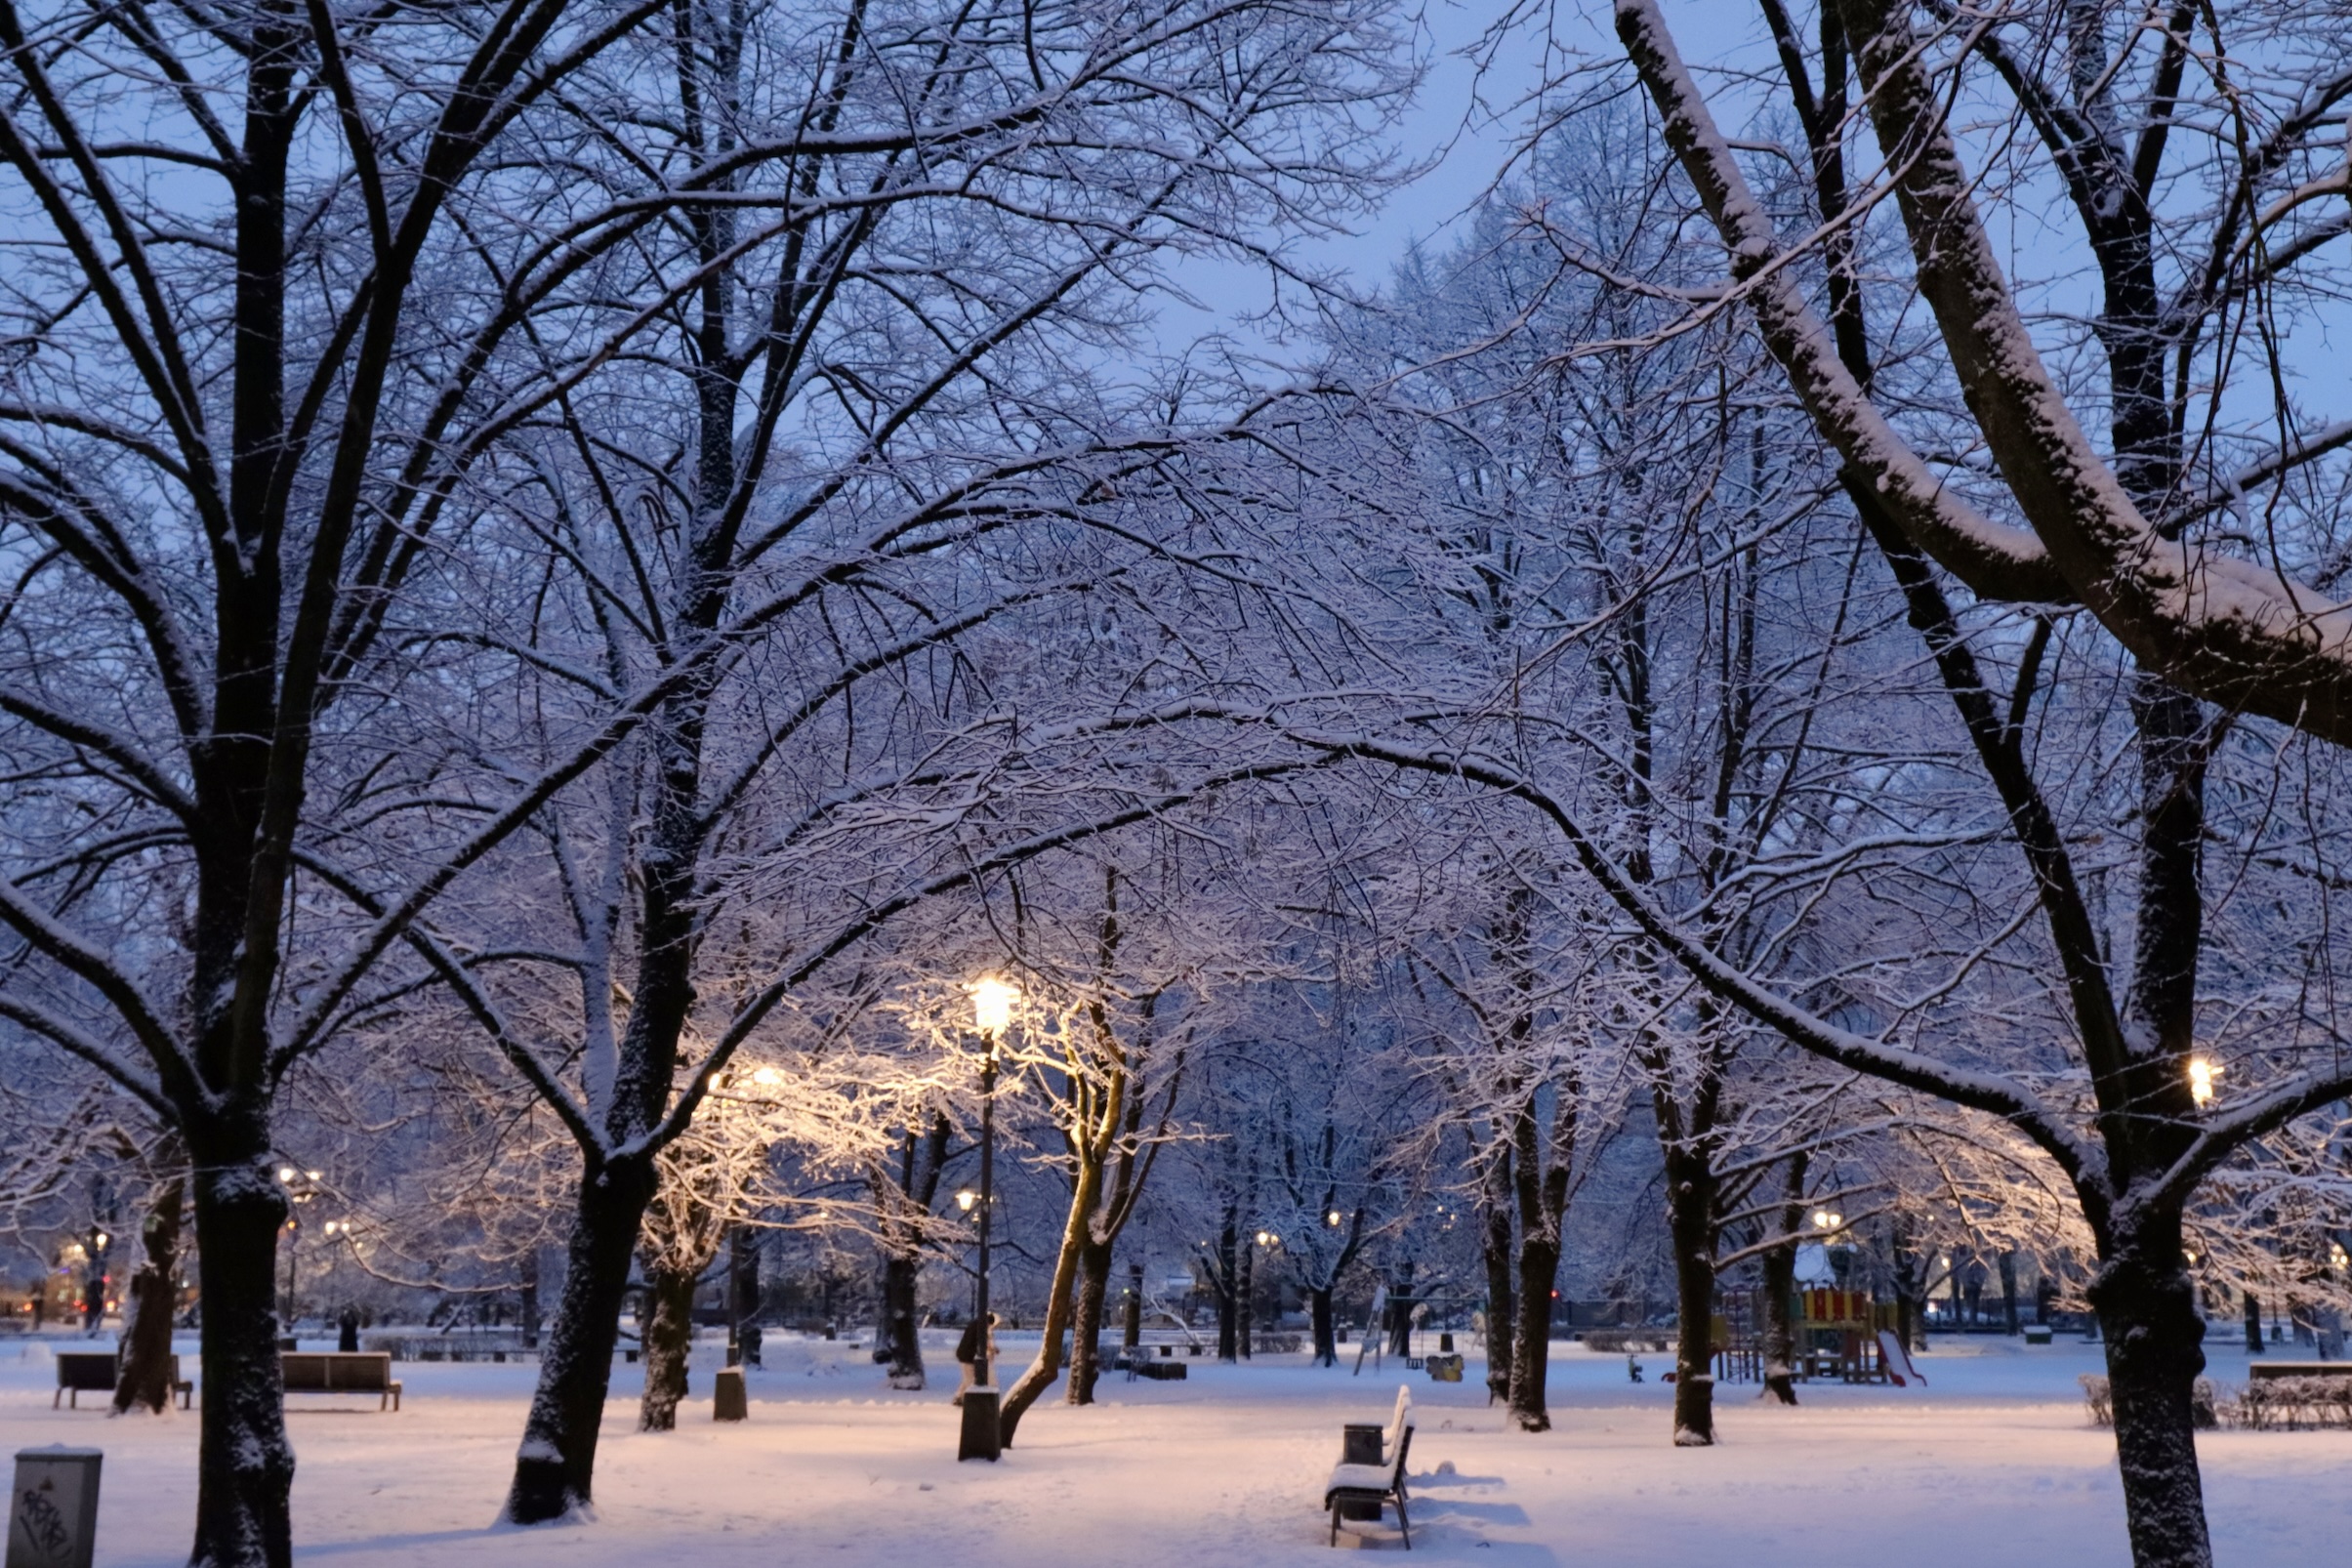 Streetlights illuminate a quiet, snow-covered park